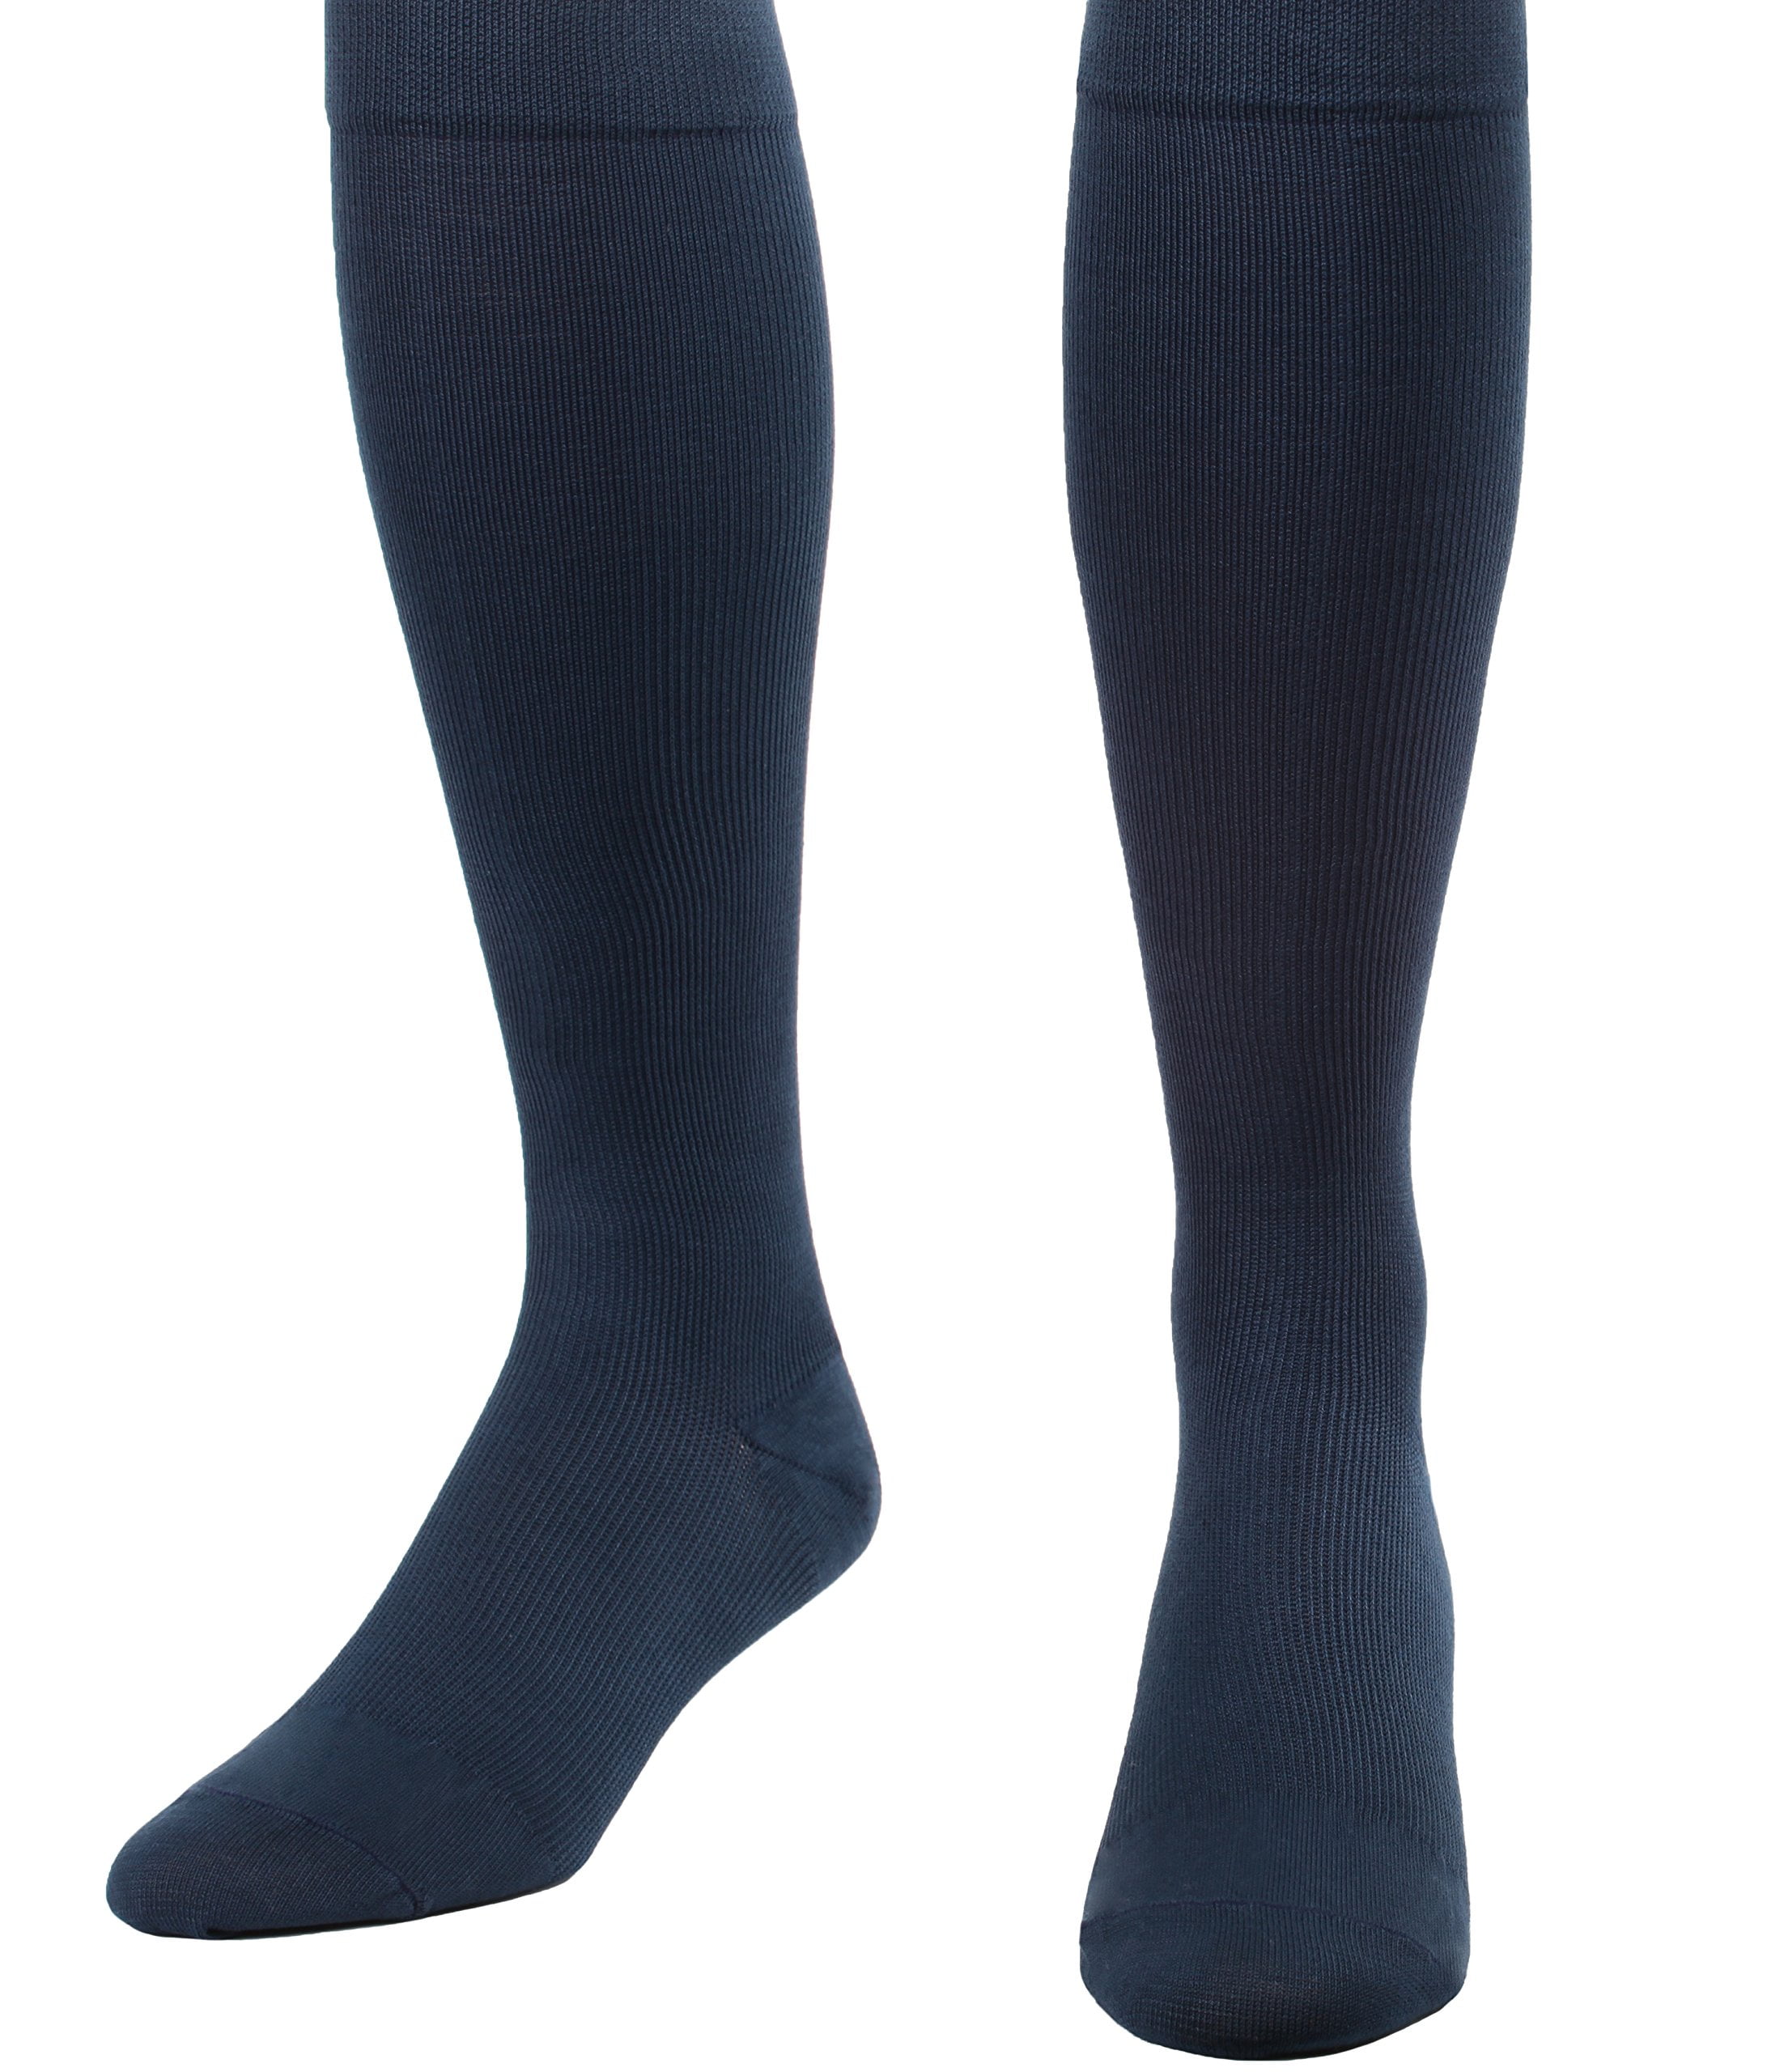 Cotton Compression Socks - Graduated Compression Medium Support Unisex ...